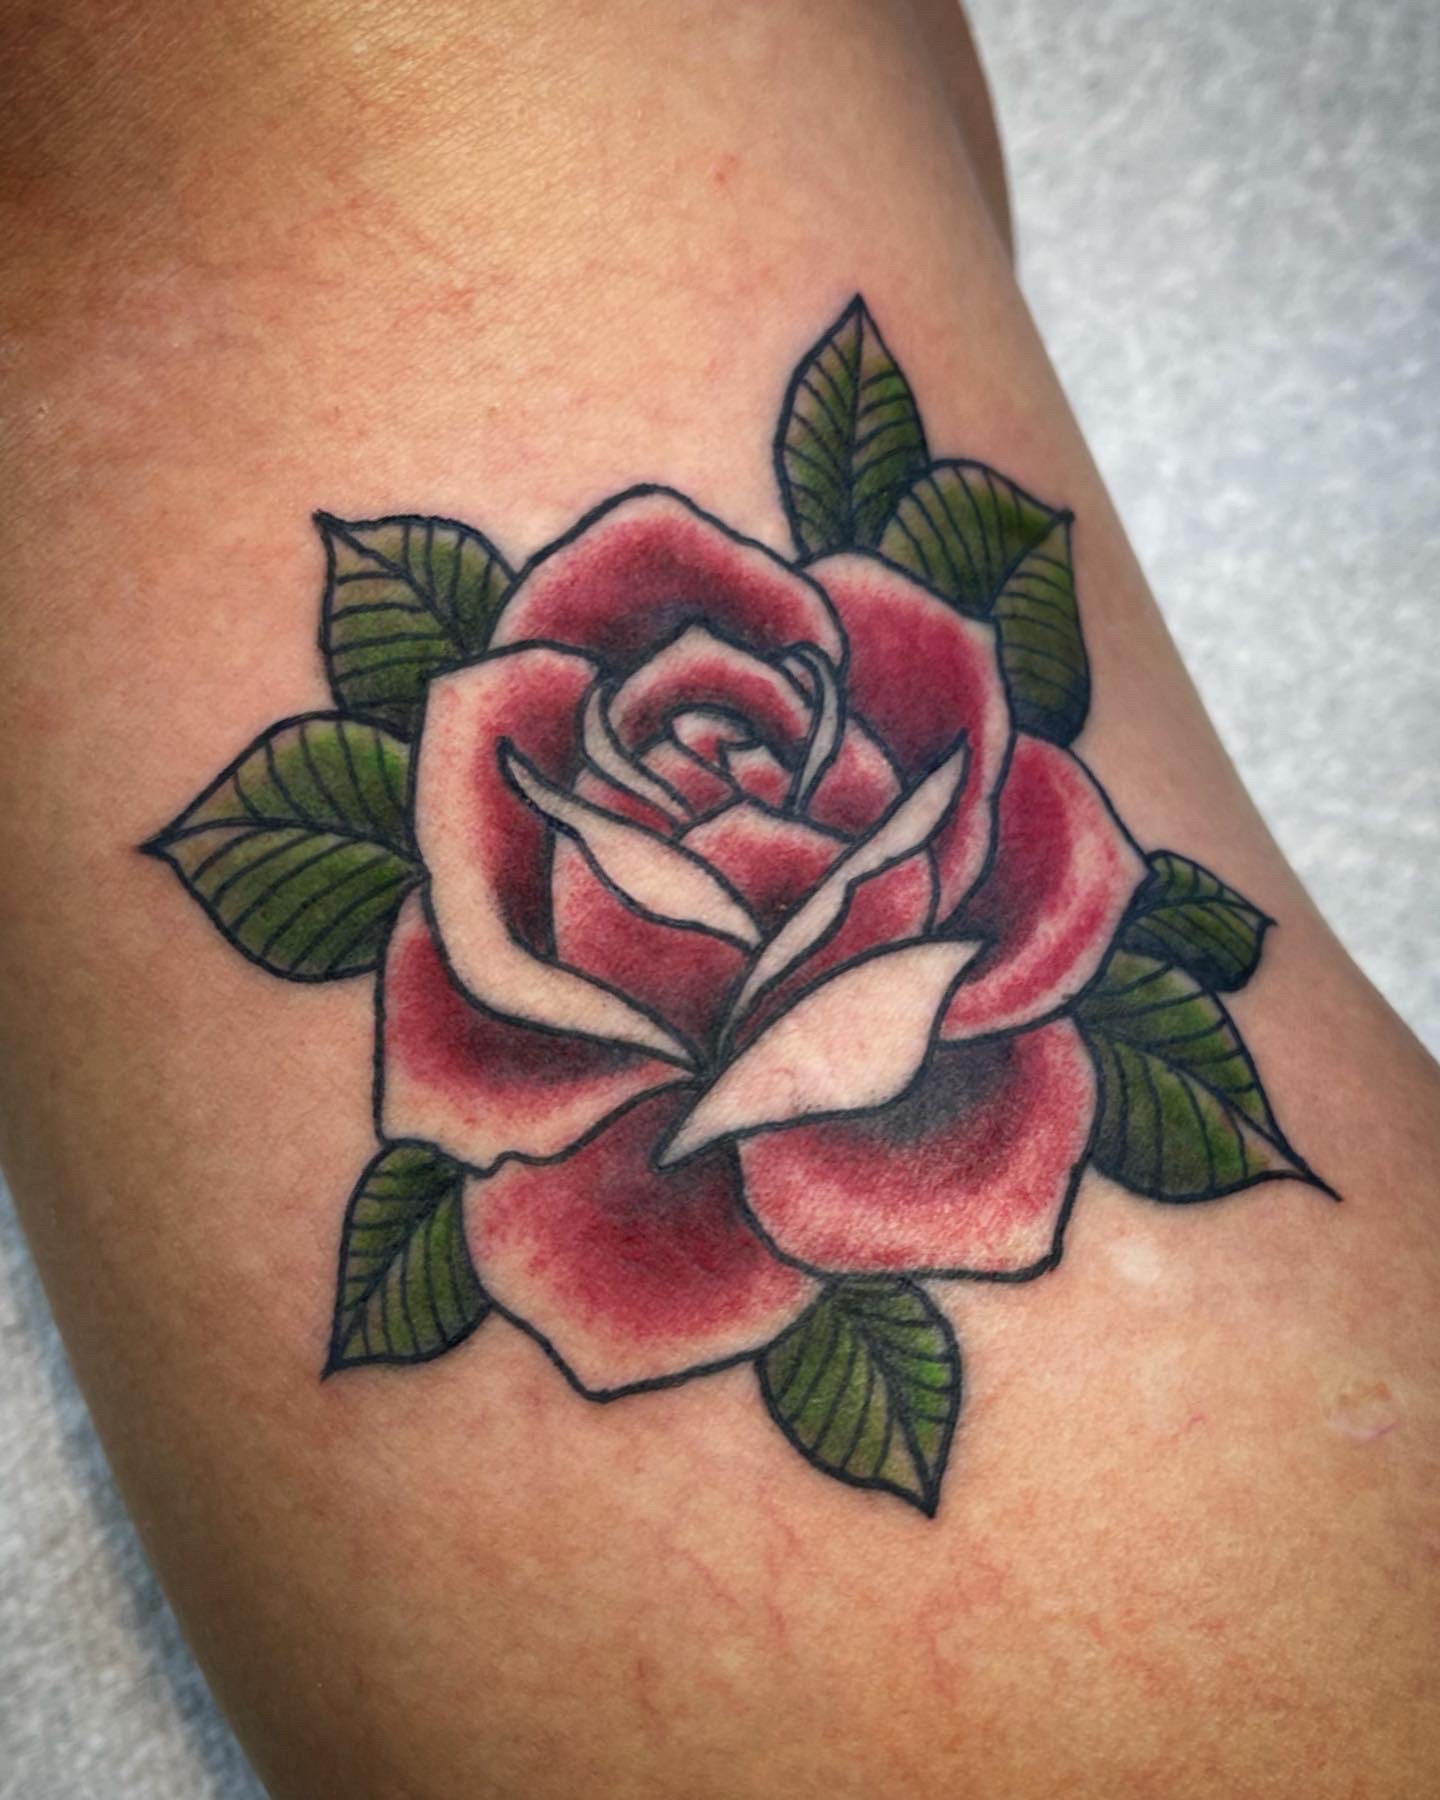 London Rose Tattoo - Roses with dot style shading • • • • • • • • • • • • •  • • #tattoo #tattoos #industryinks #inkjecta #minnesota #tattooartist #mn  #sola #solasalons #londonrosetattoo #lrt | Facebook